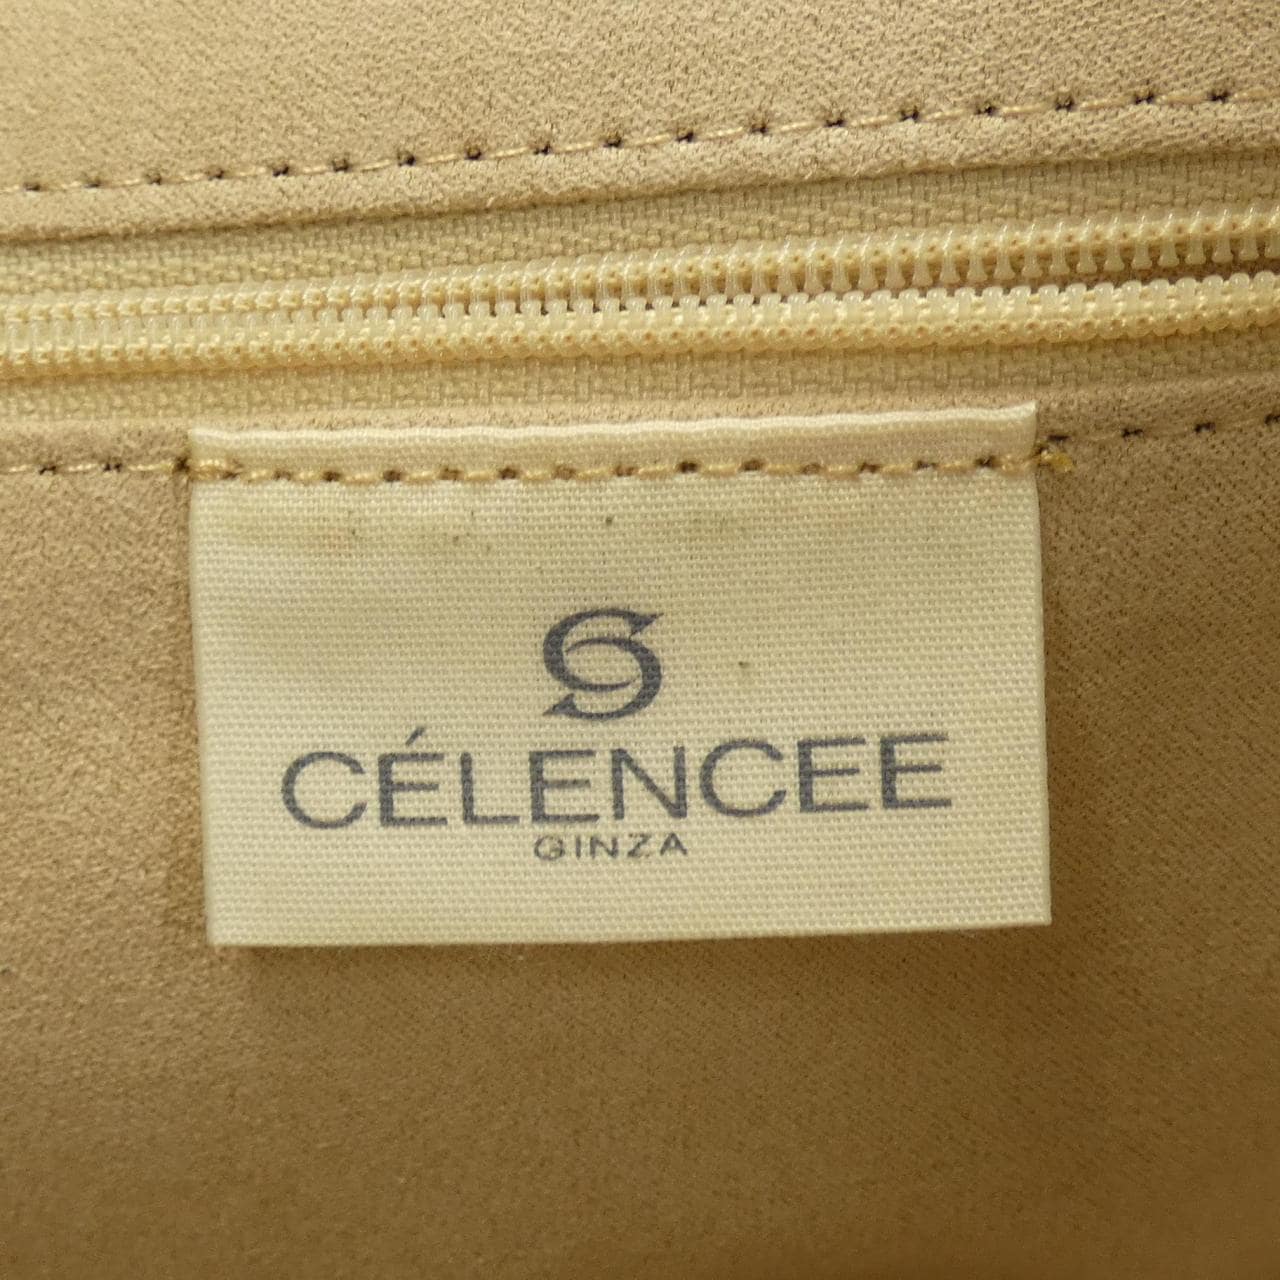 CELENCEE BAG